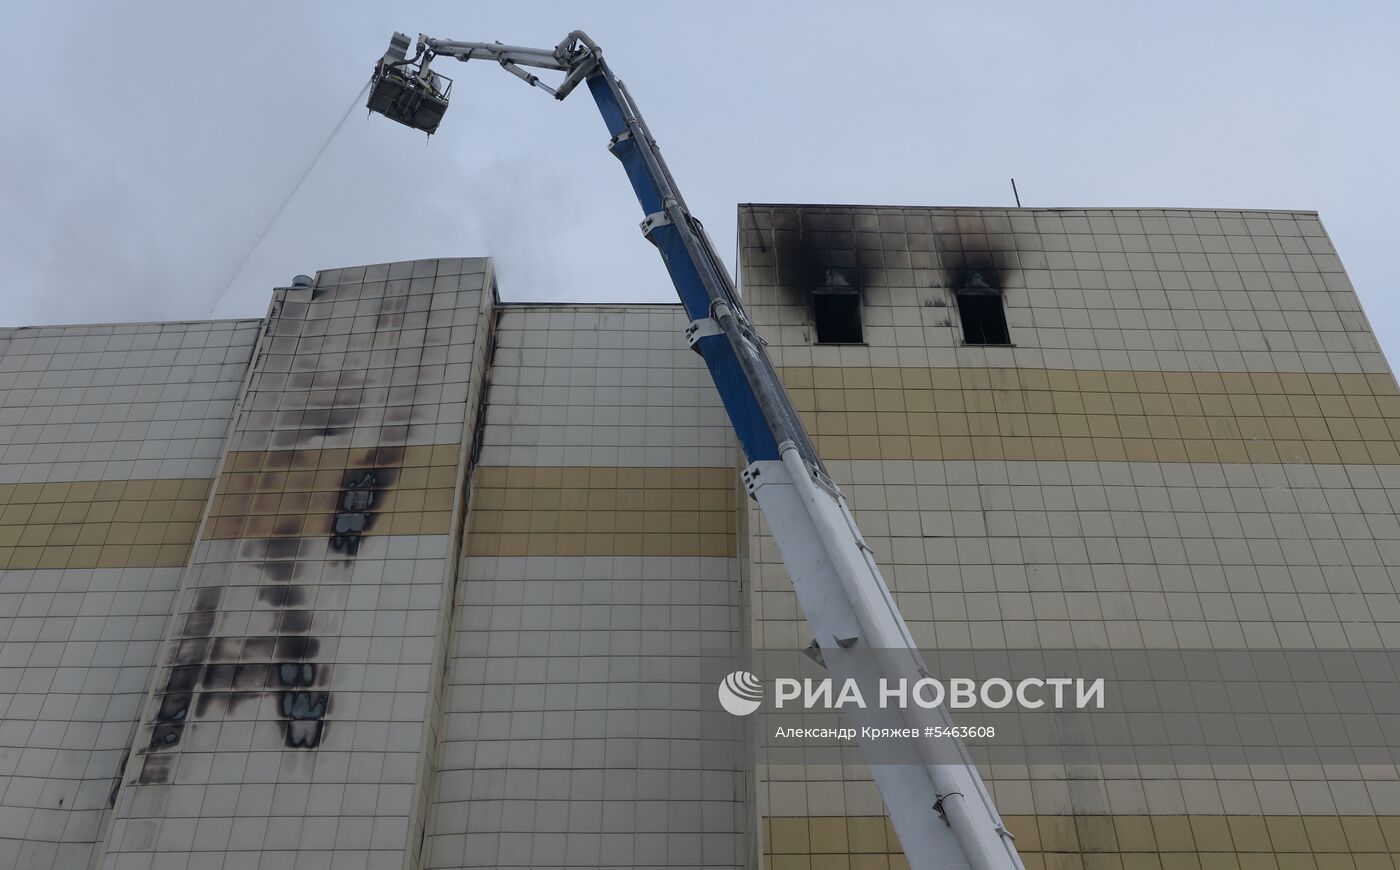 Пожар в торговом центре «Зимняя вишня» в Кемерово